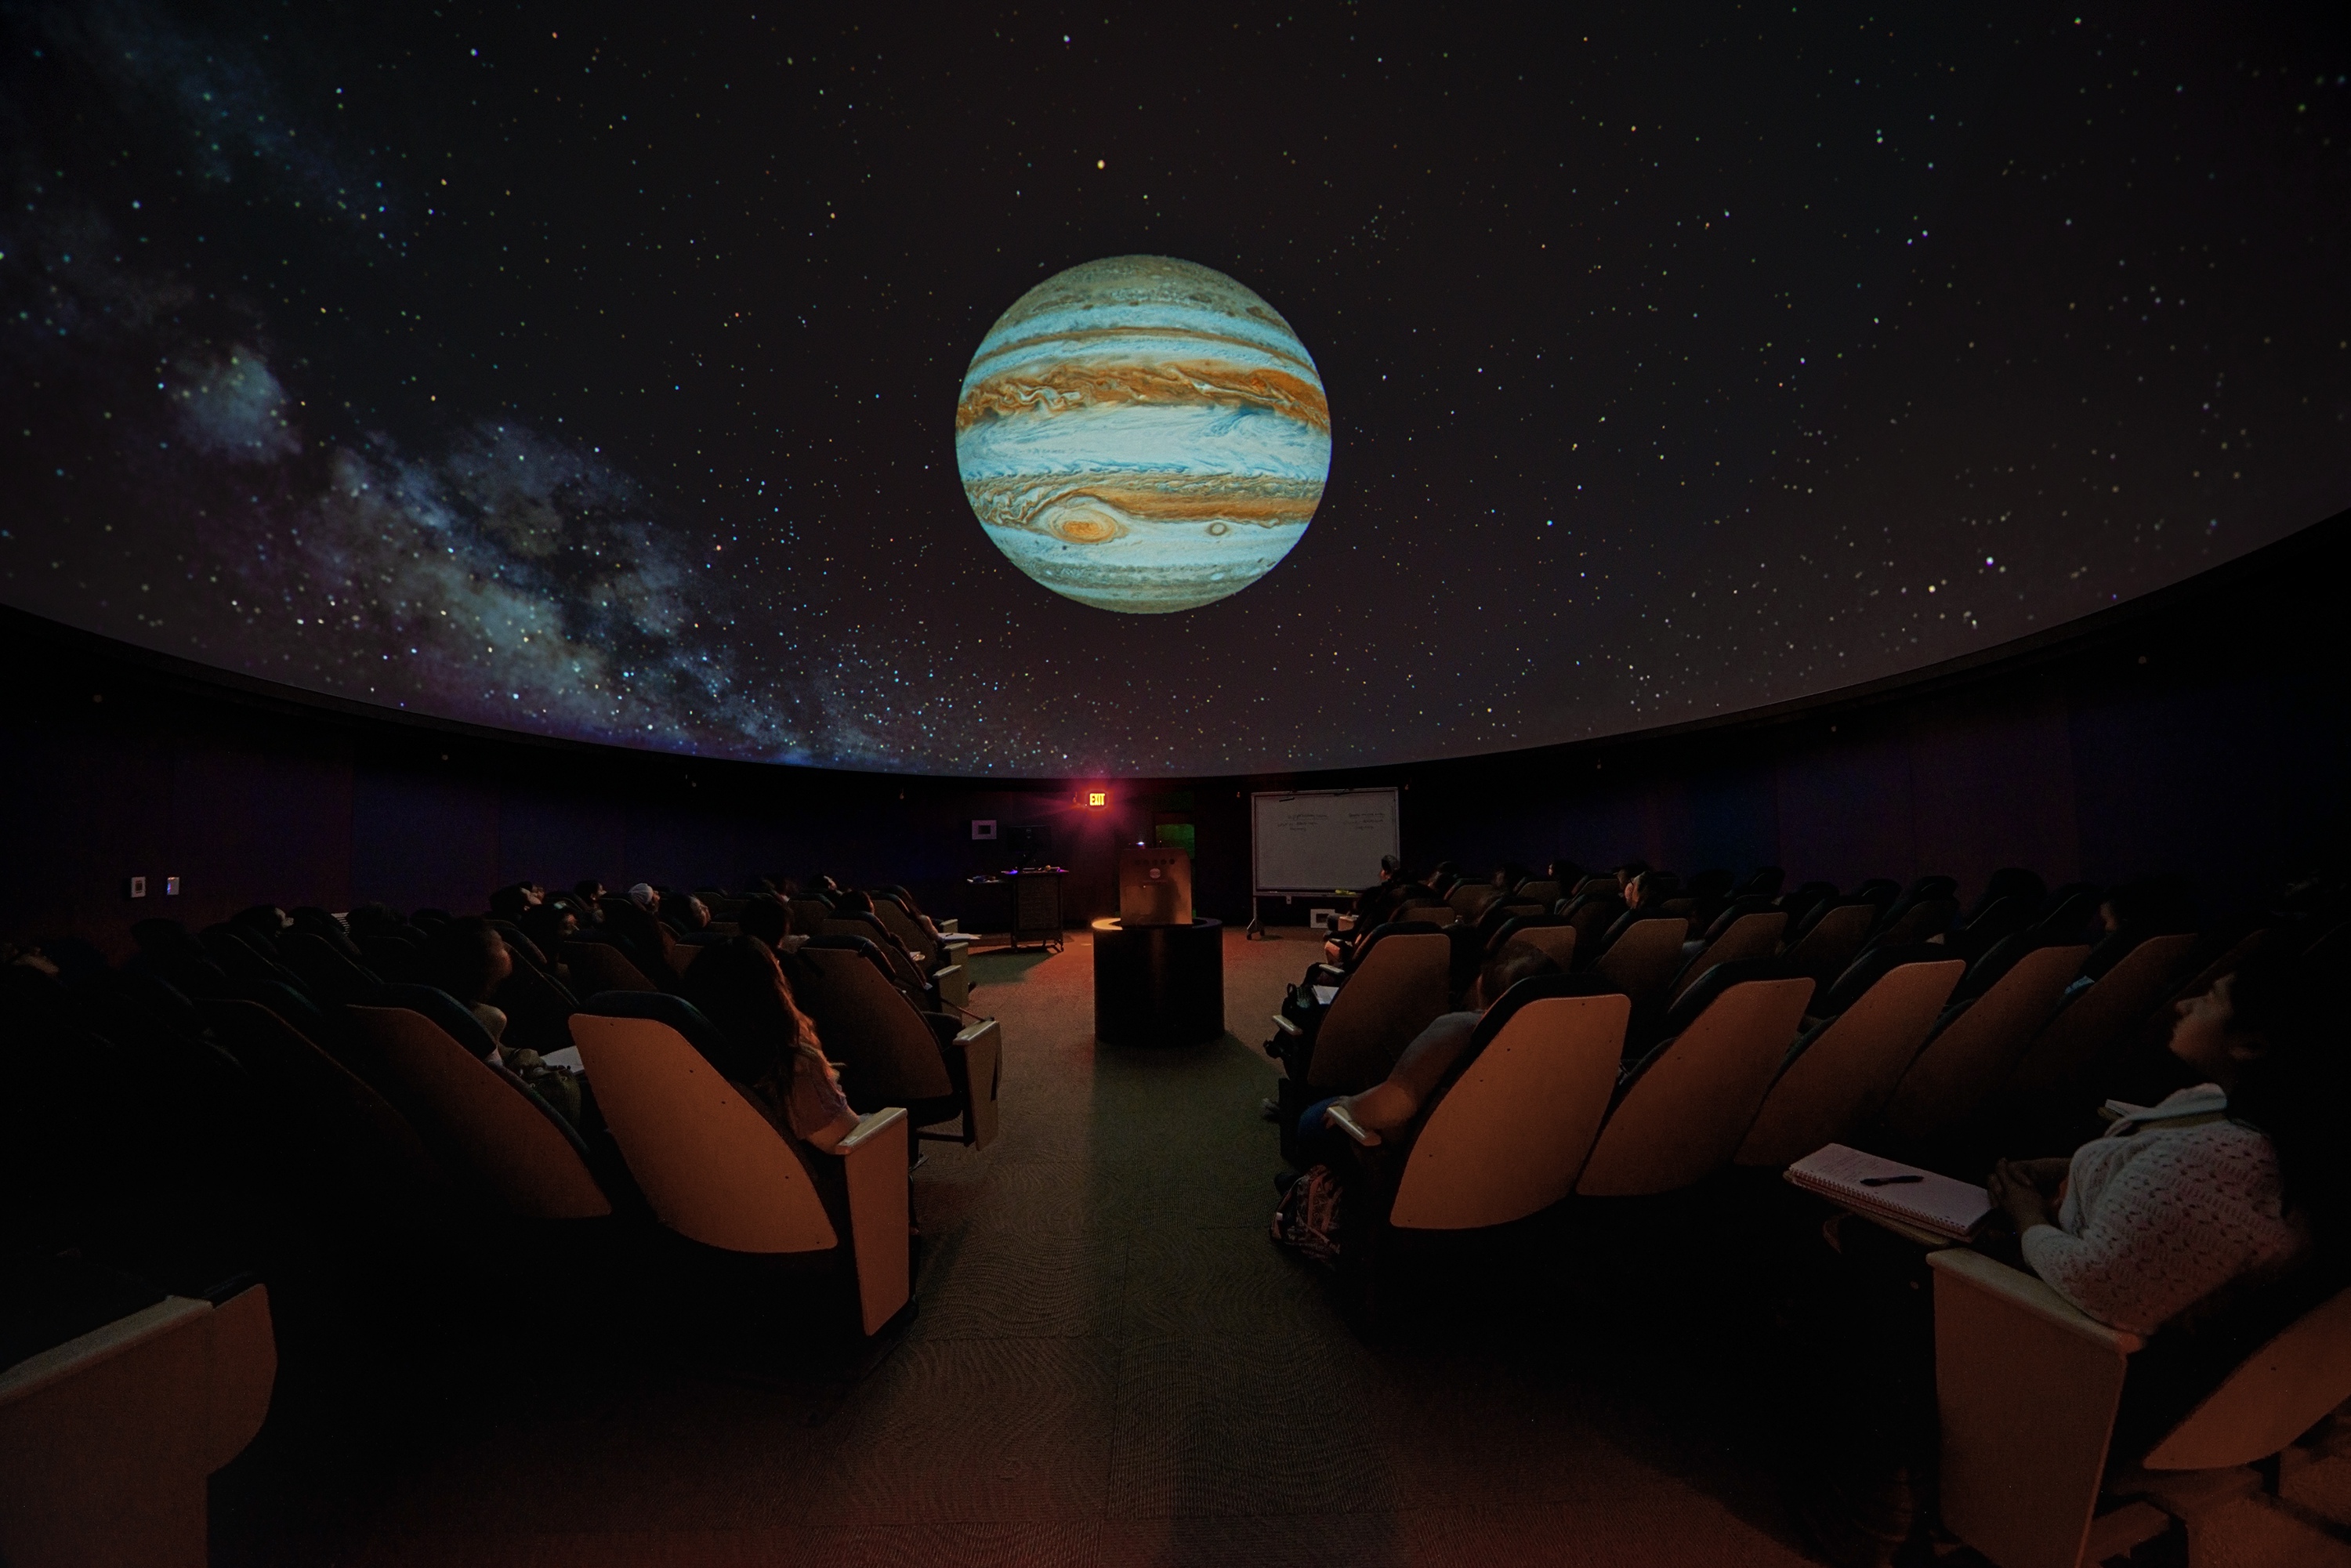 Hartnell College’s new planetarium